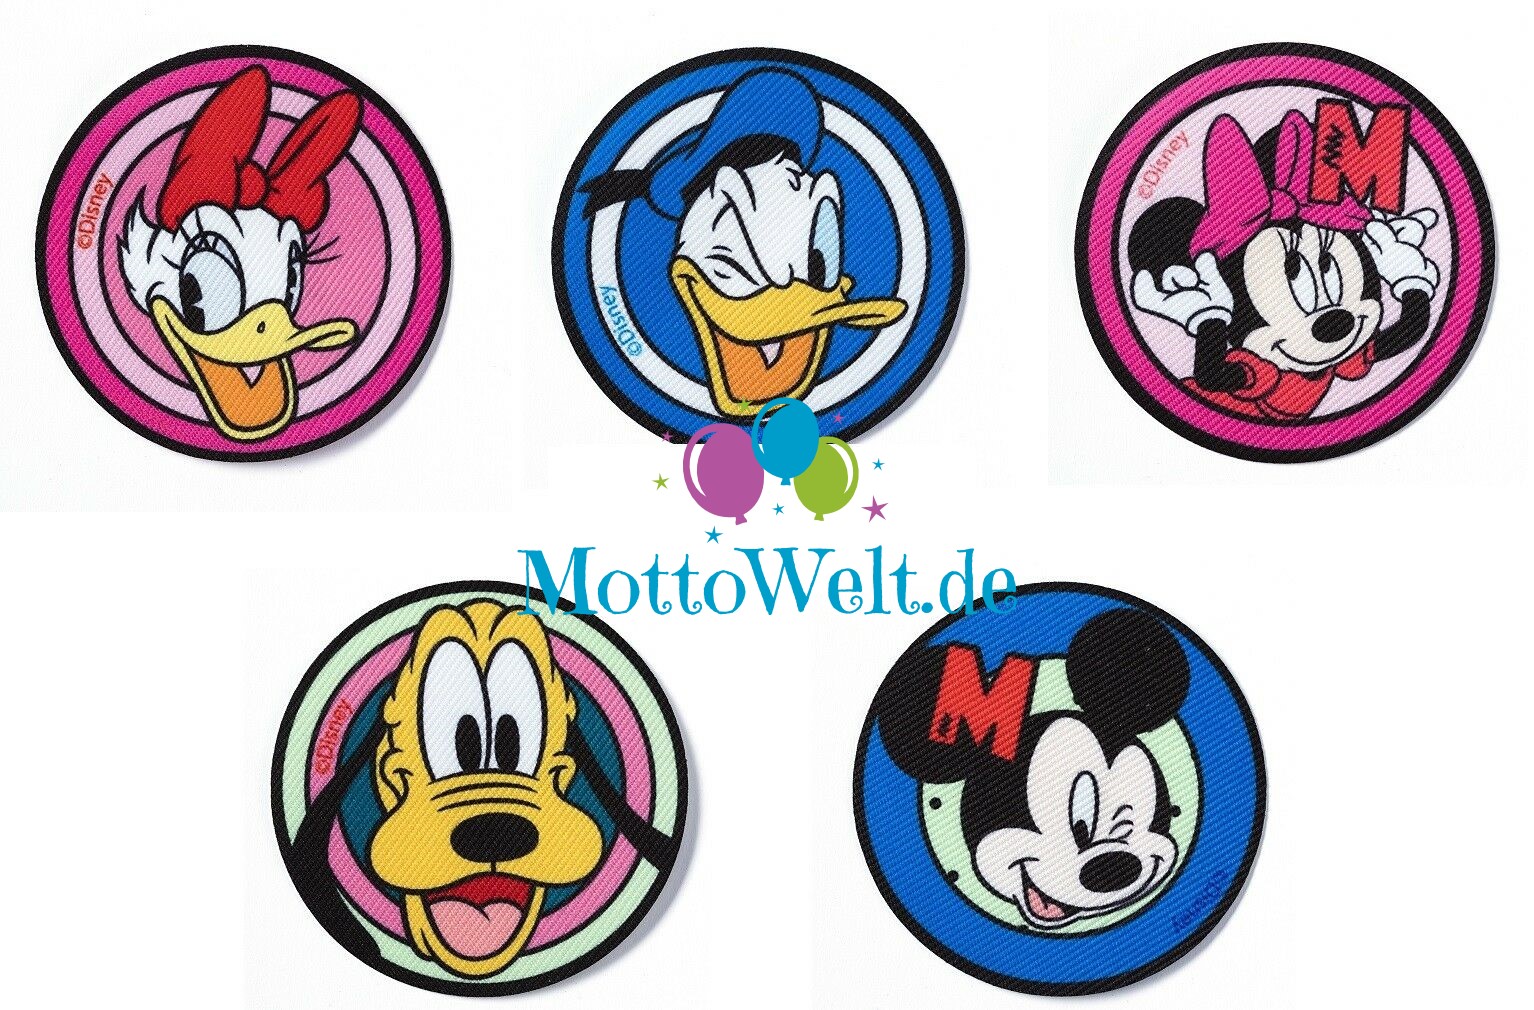 Disney 925181 Applikation Rund, Mickey Minnie Mouse Donald Daisy Pluto Bügelbild